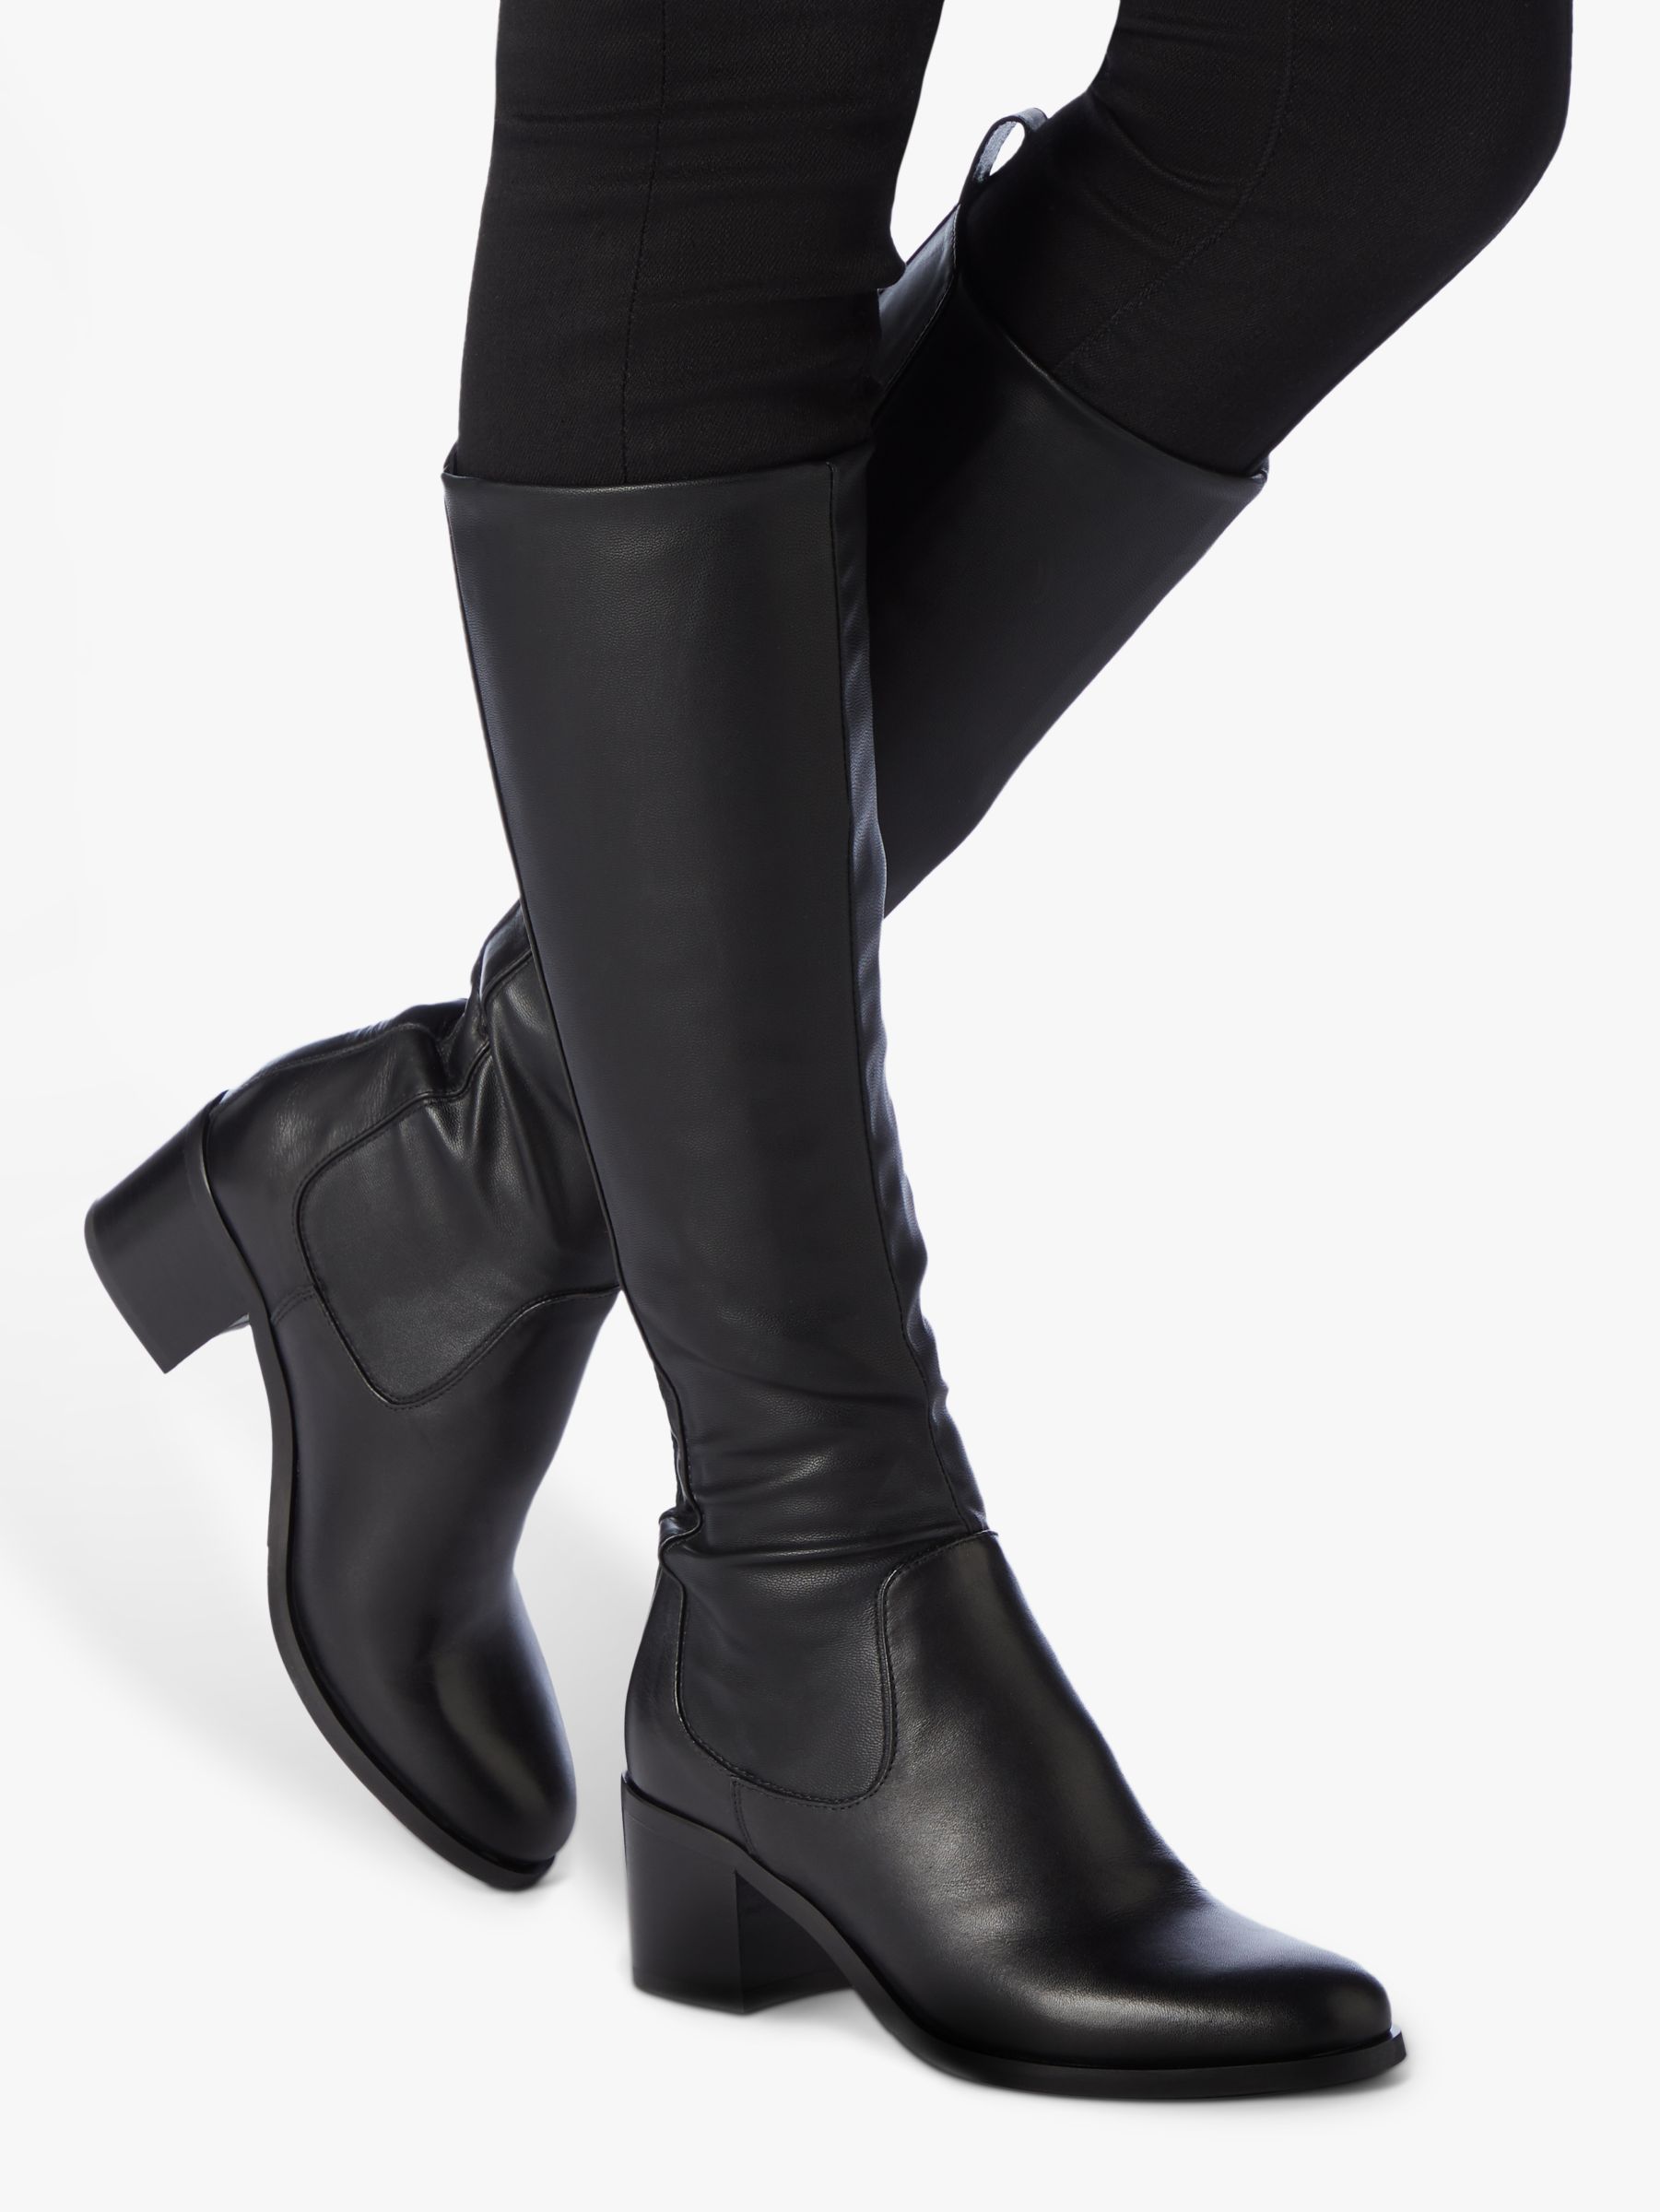 leather block heel knee high boots